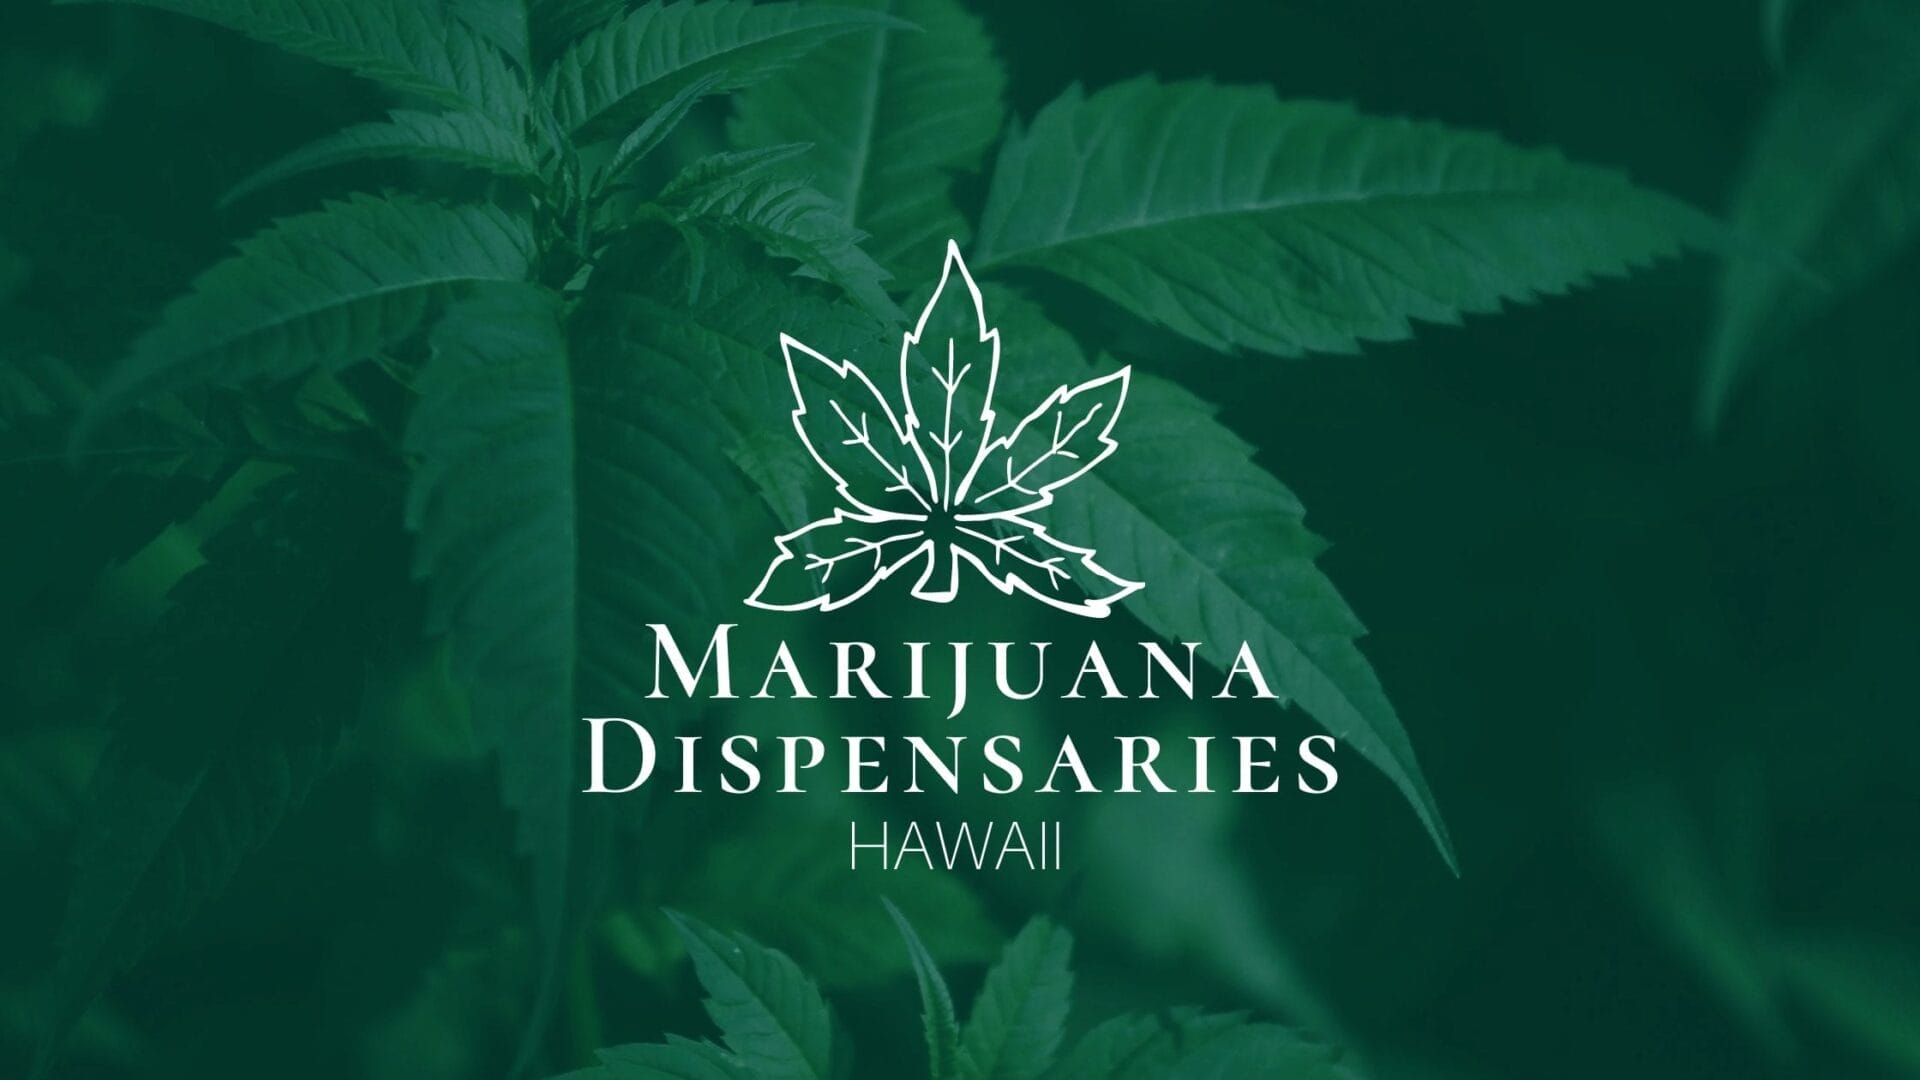 Marijuana Dispensaries in Hawaii